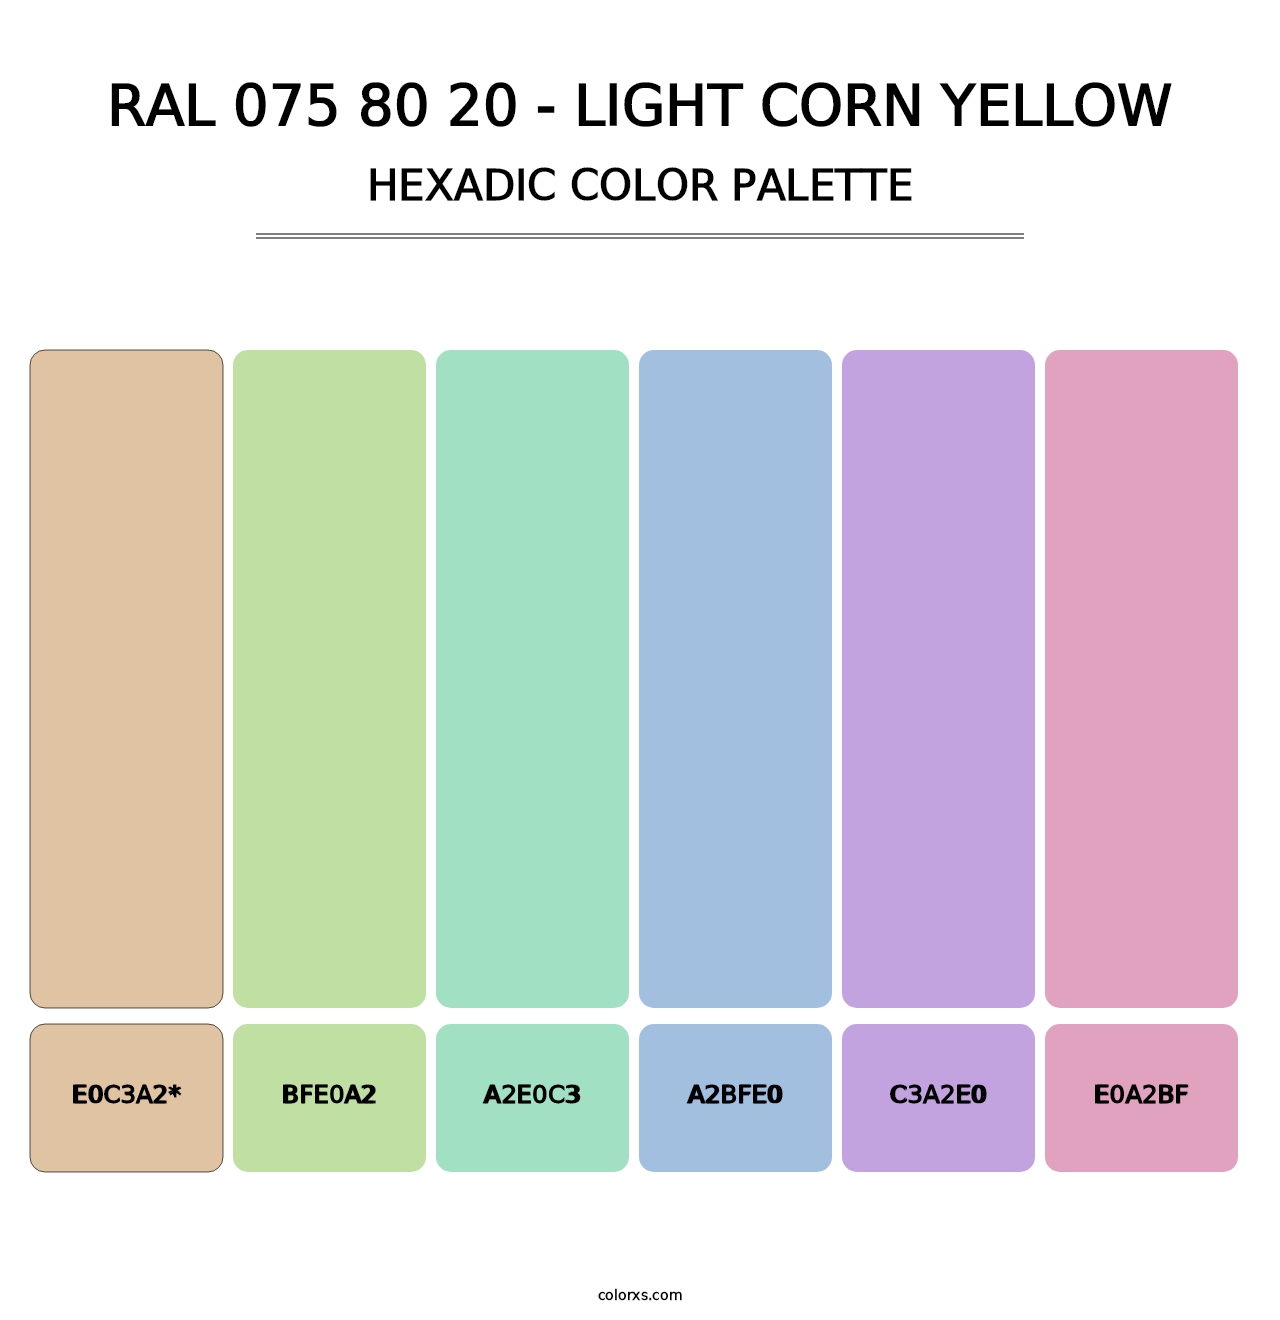 RAL 075 80 20 - Light Corn Yellow - Hexadic Color Palette